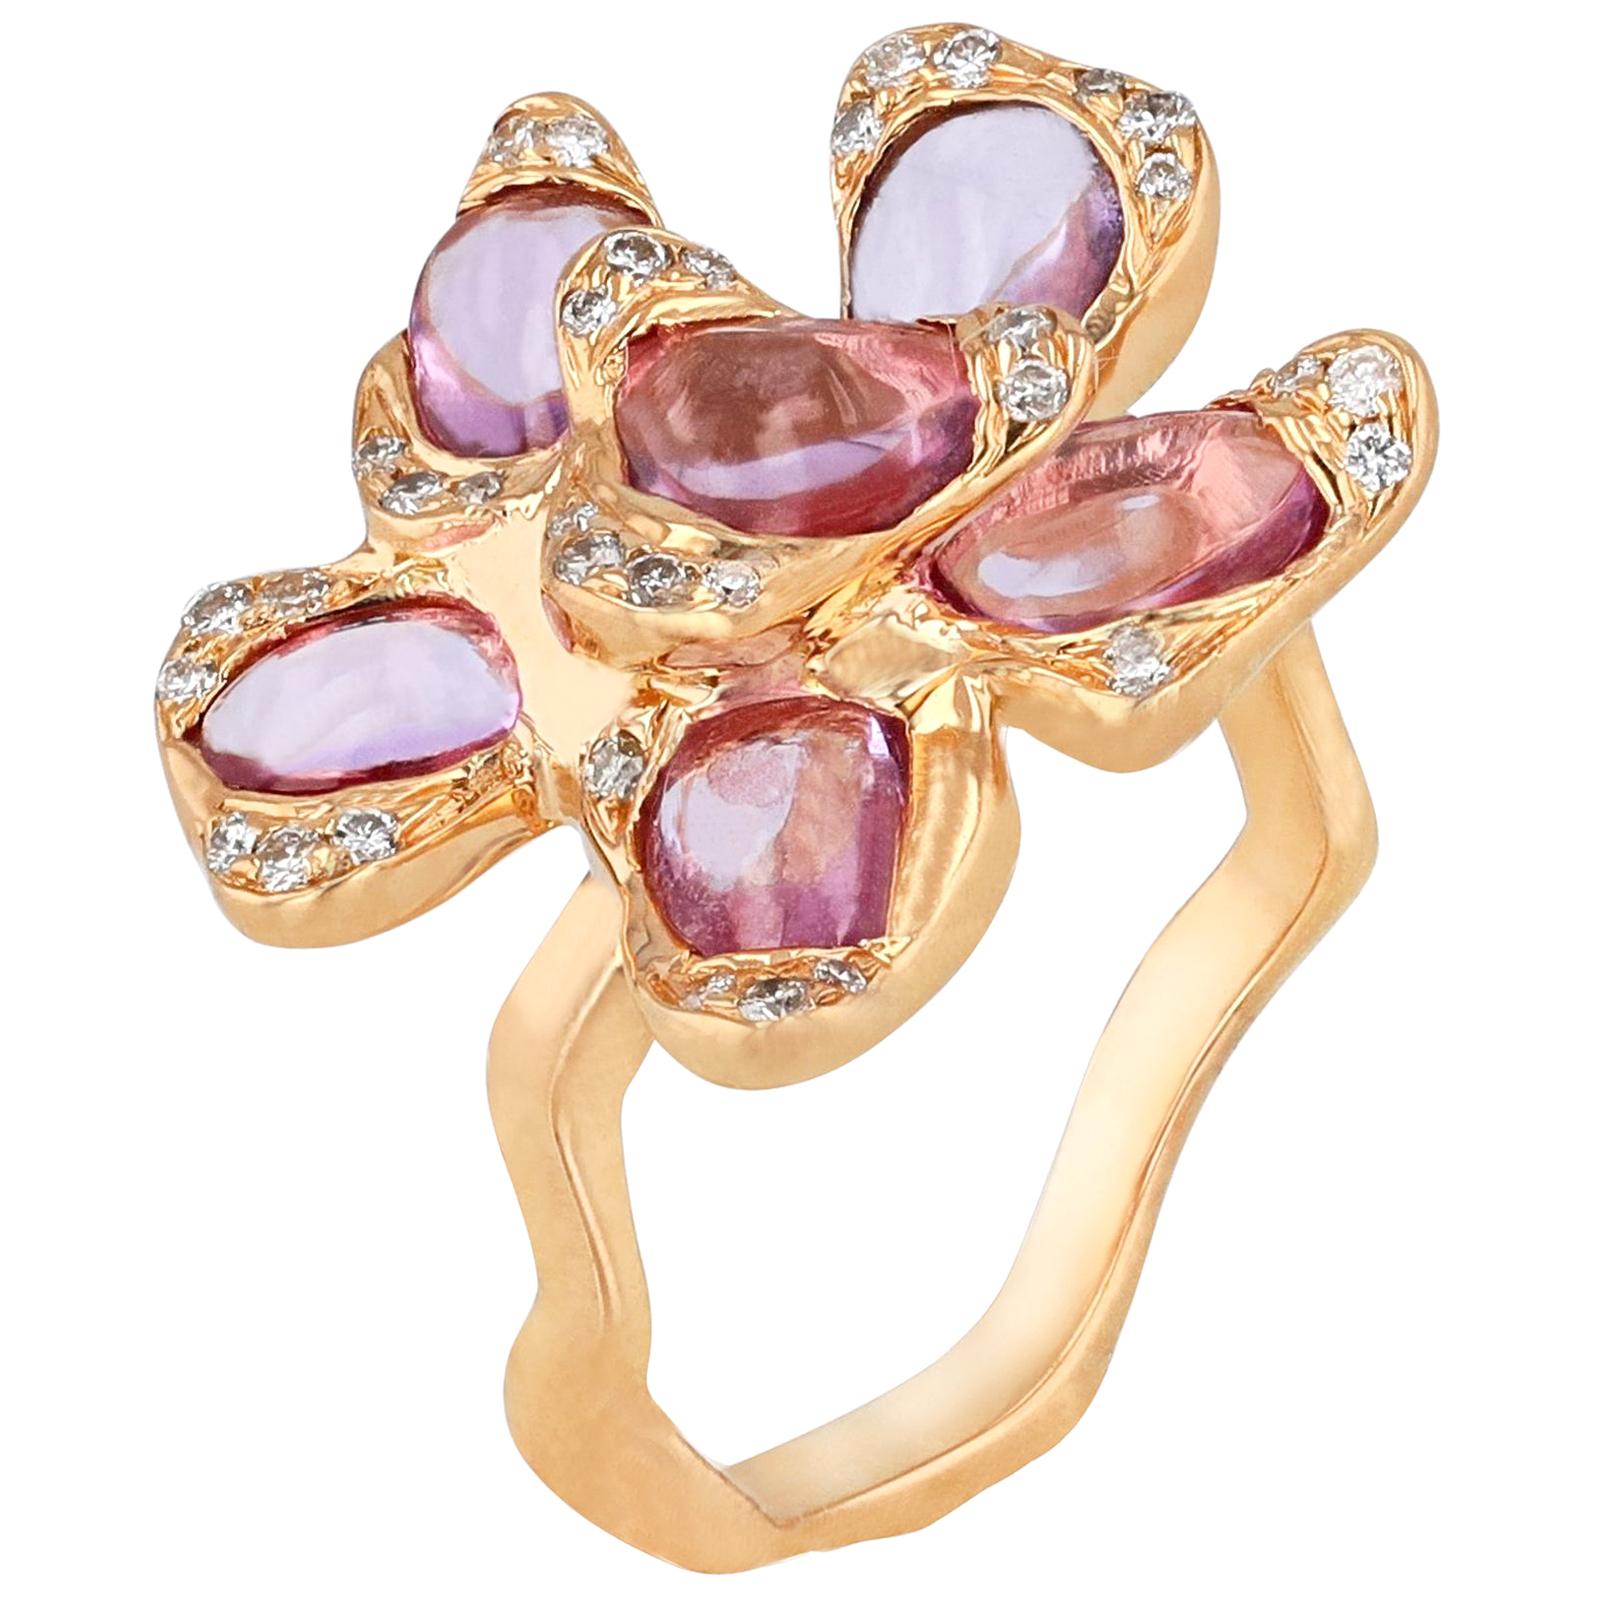 18 Karat Rose Gold Flower Ring with Pink Sapphires